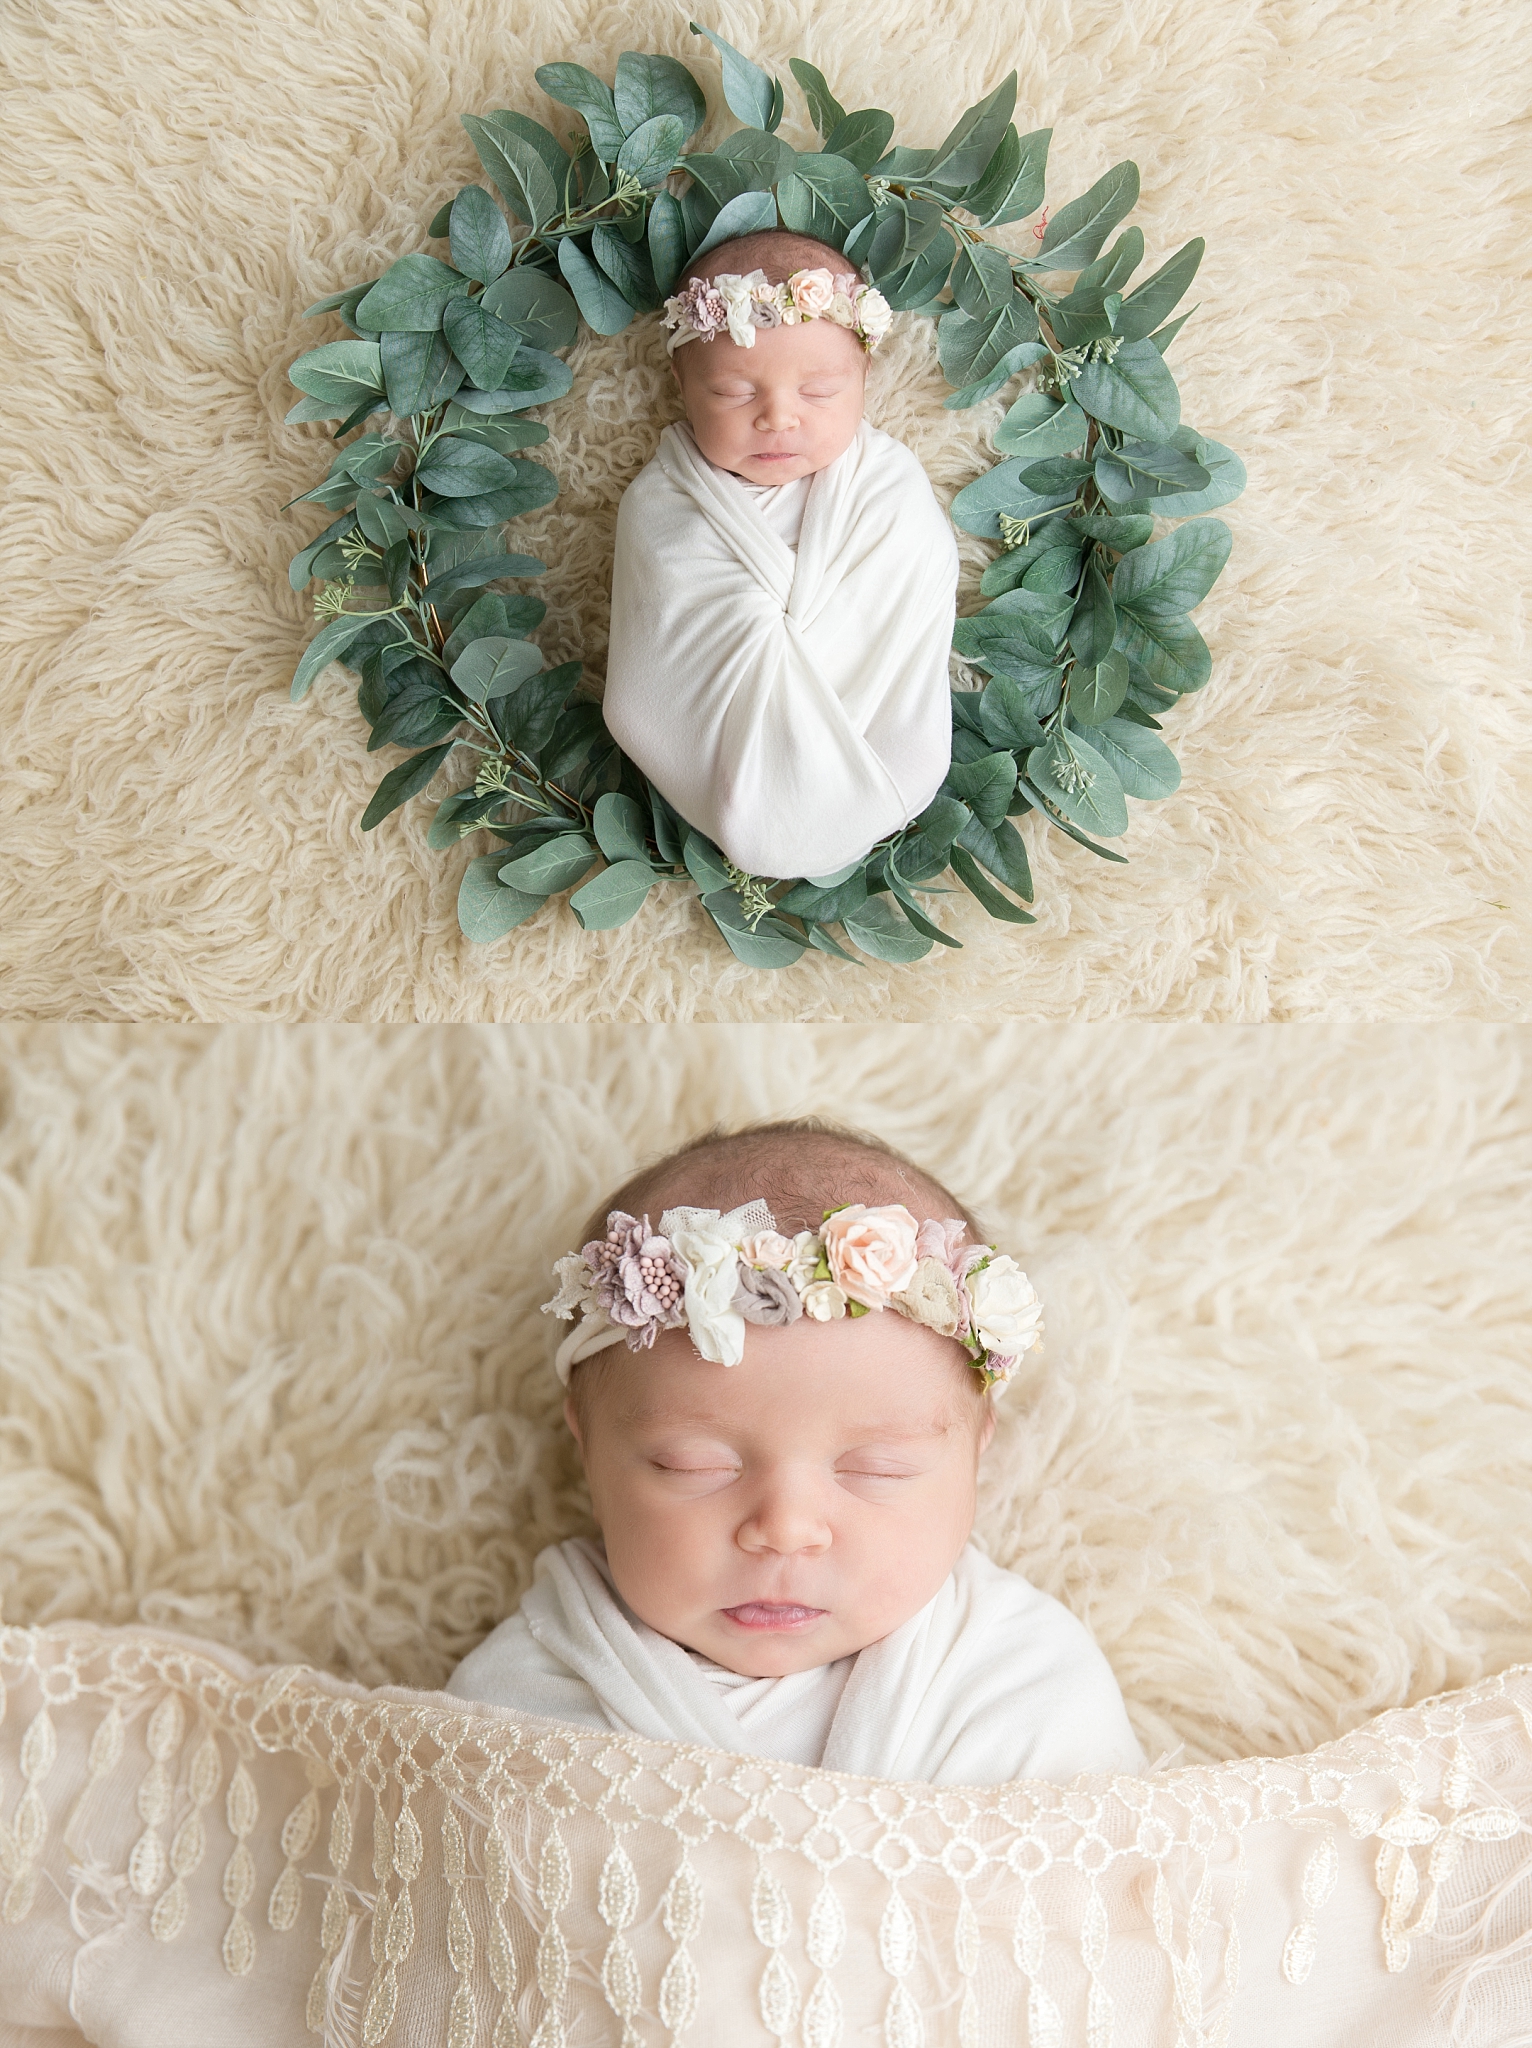 st-louis-newborn-photographer-collage-baby-girl-on-cream-fur-with-green-wreath.jpg